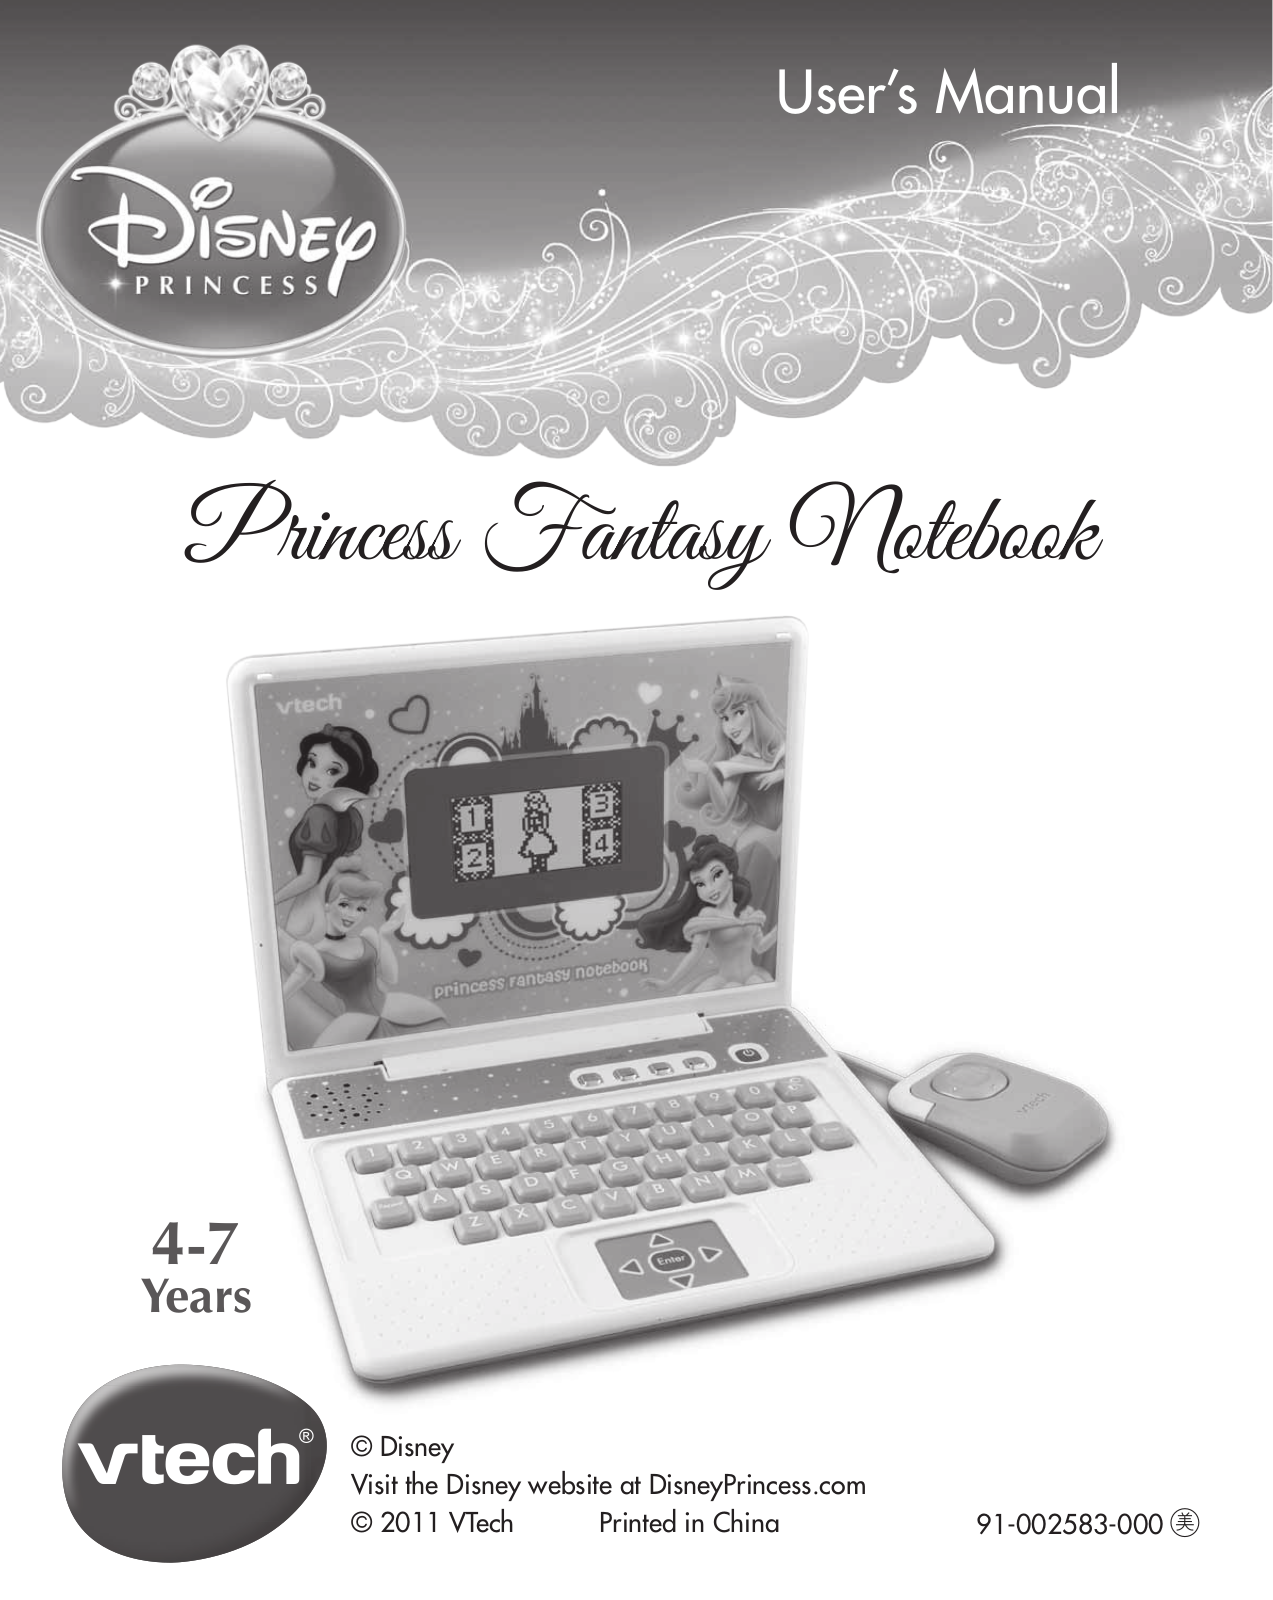 VTech Princess Fantasy Notebook Owner's Manual